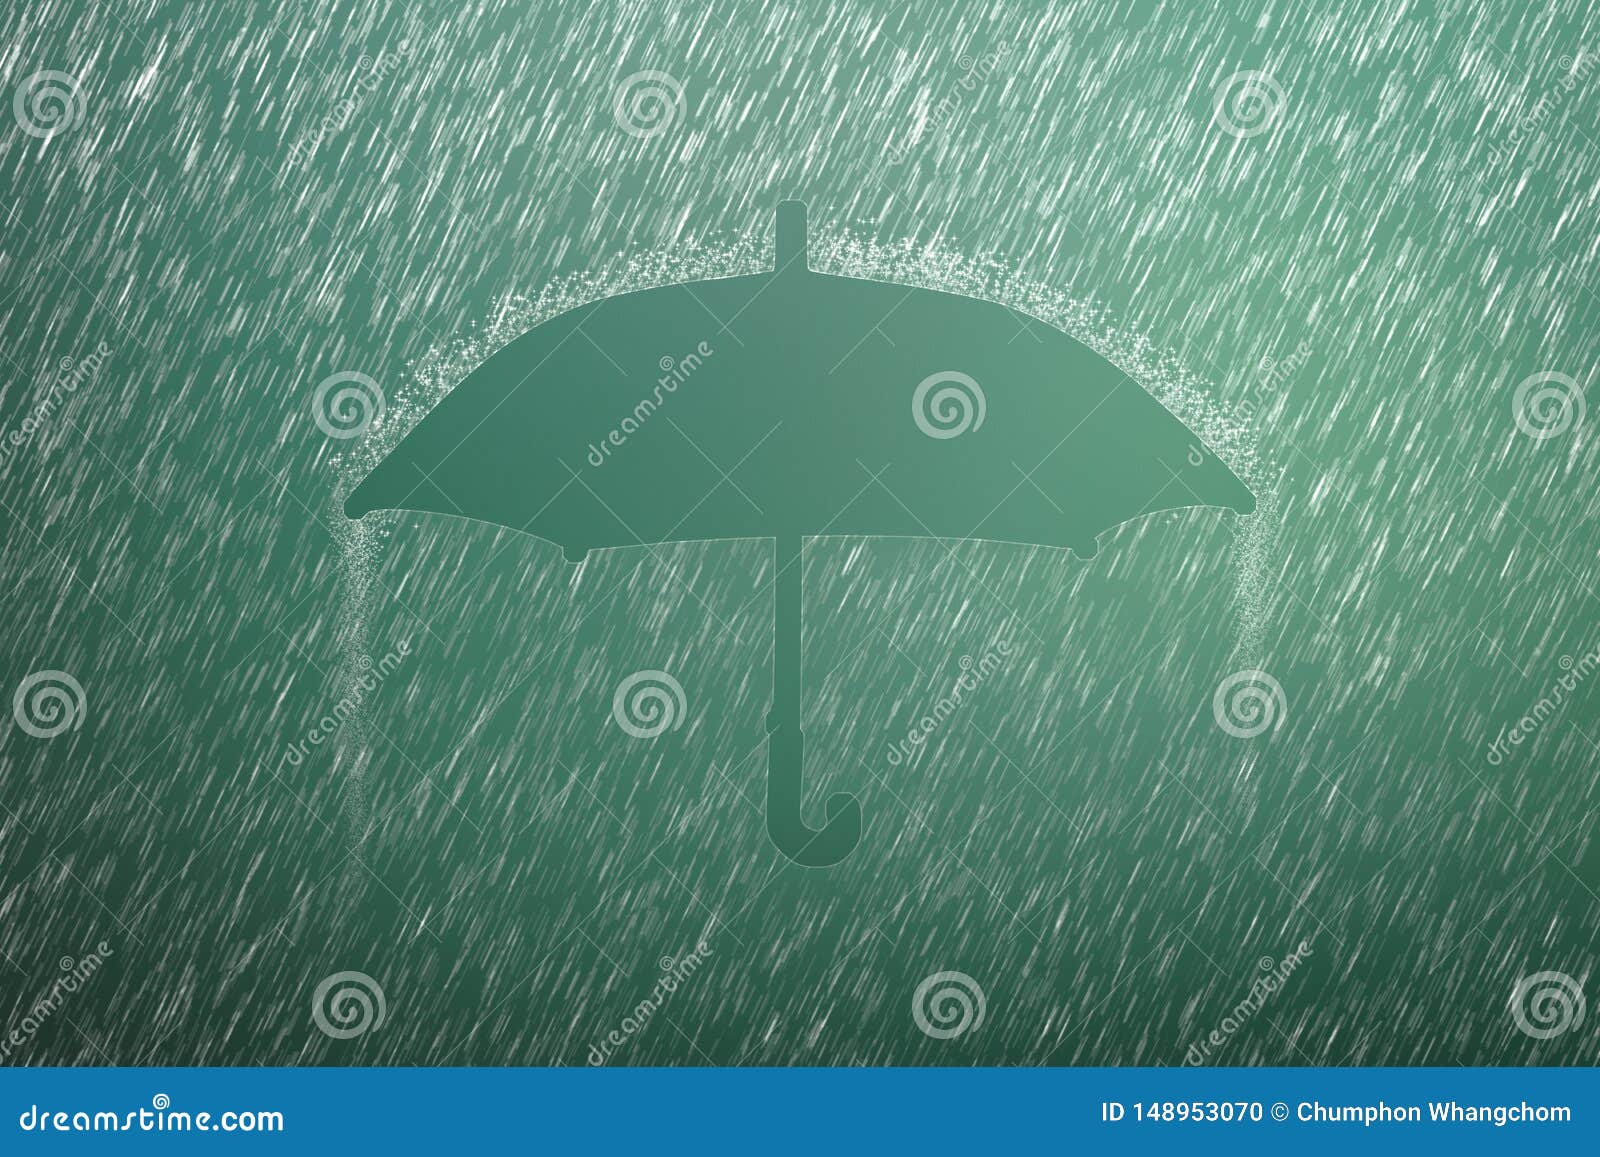 falling raindrop on green background with umbrella . heavy rain and weather storm in raining season